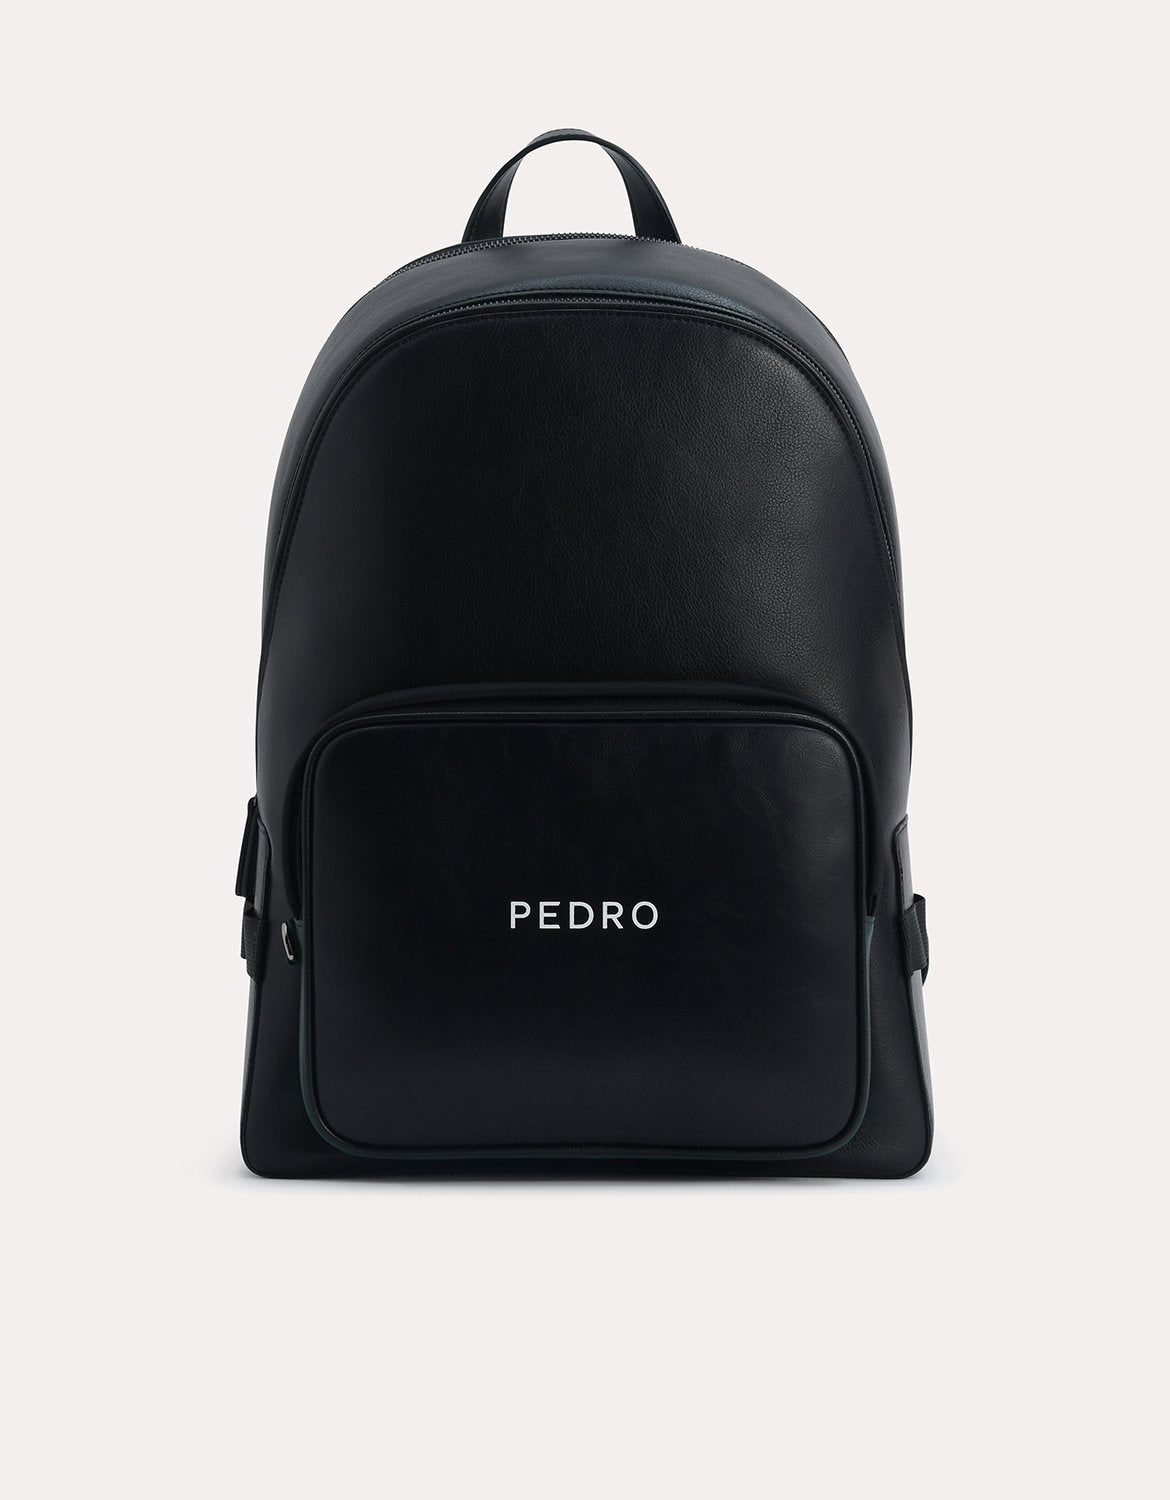 Pedro Bag for Men / New Collection / - P-Black Cambodia